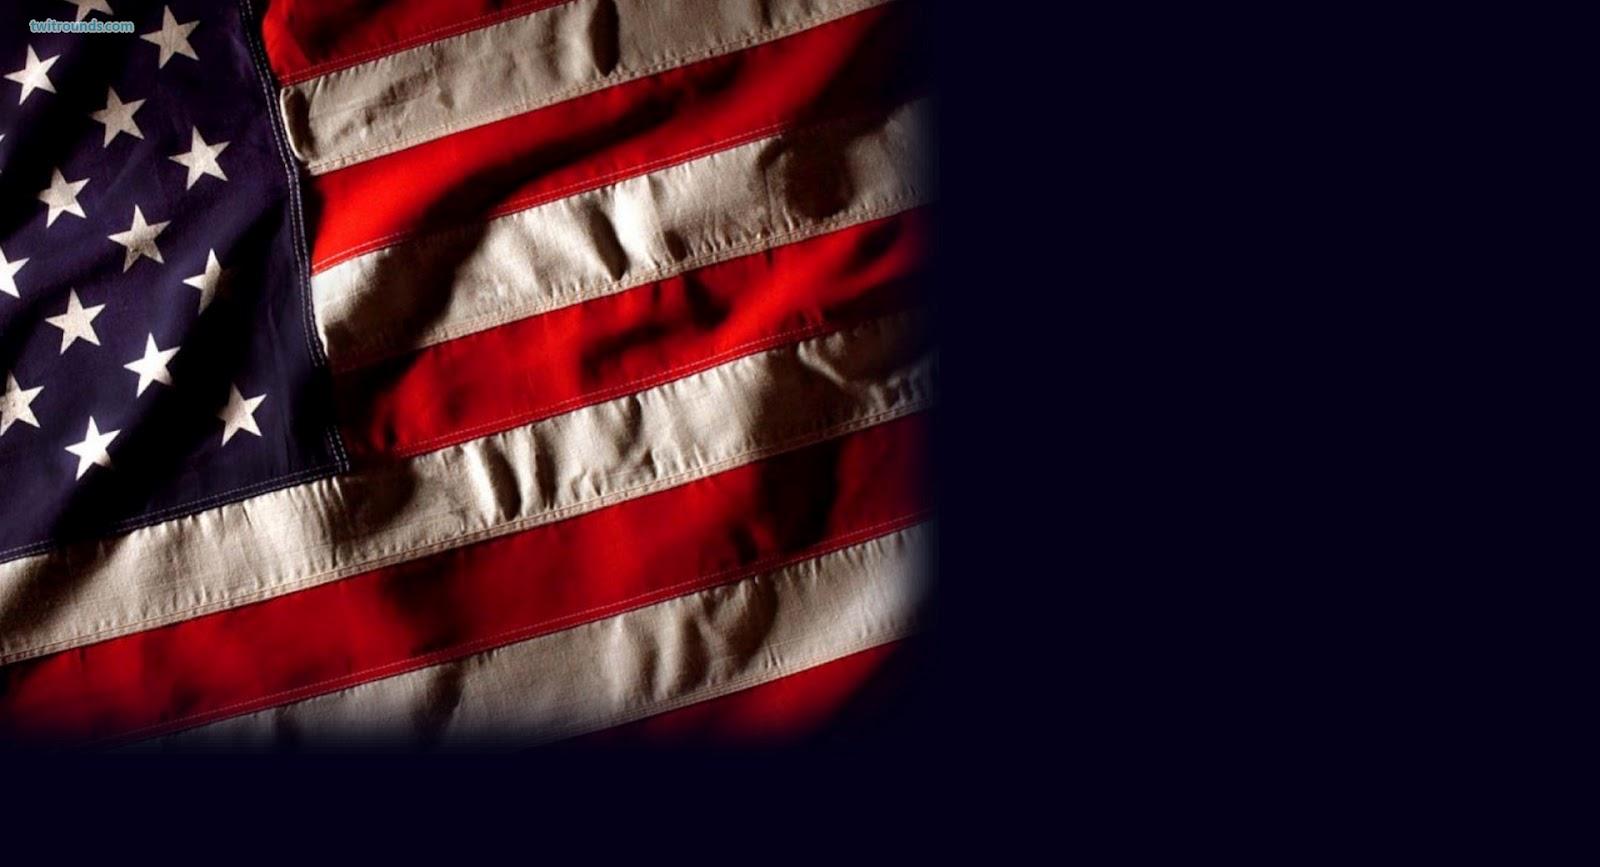 American Flag Design PPT Backgrounds